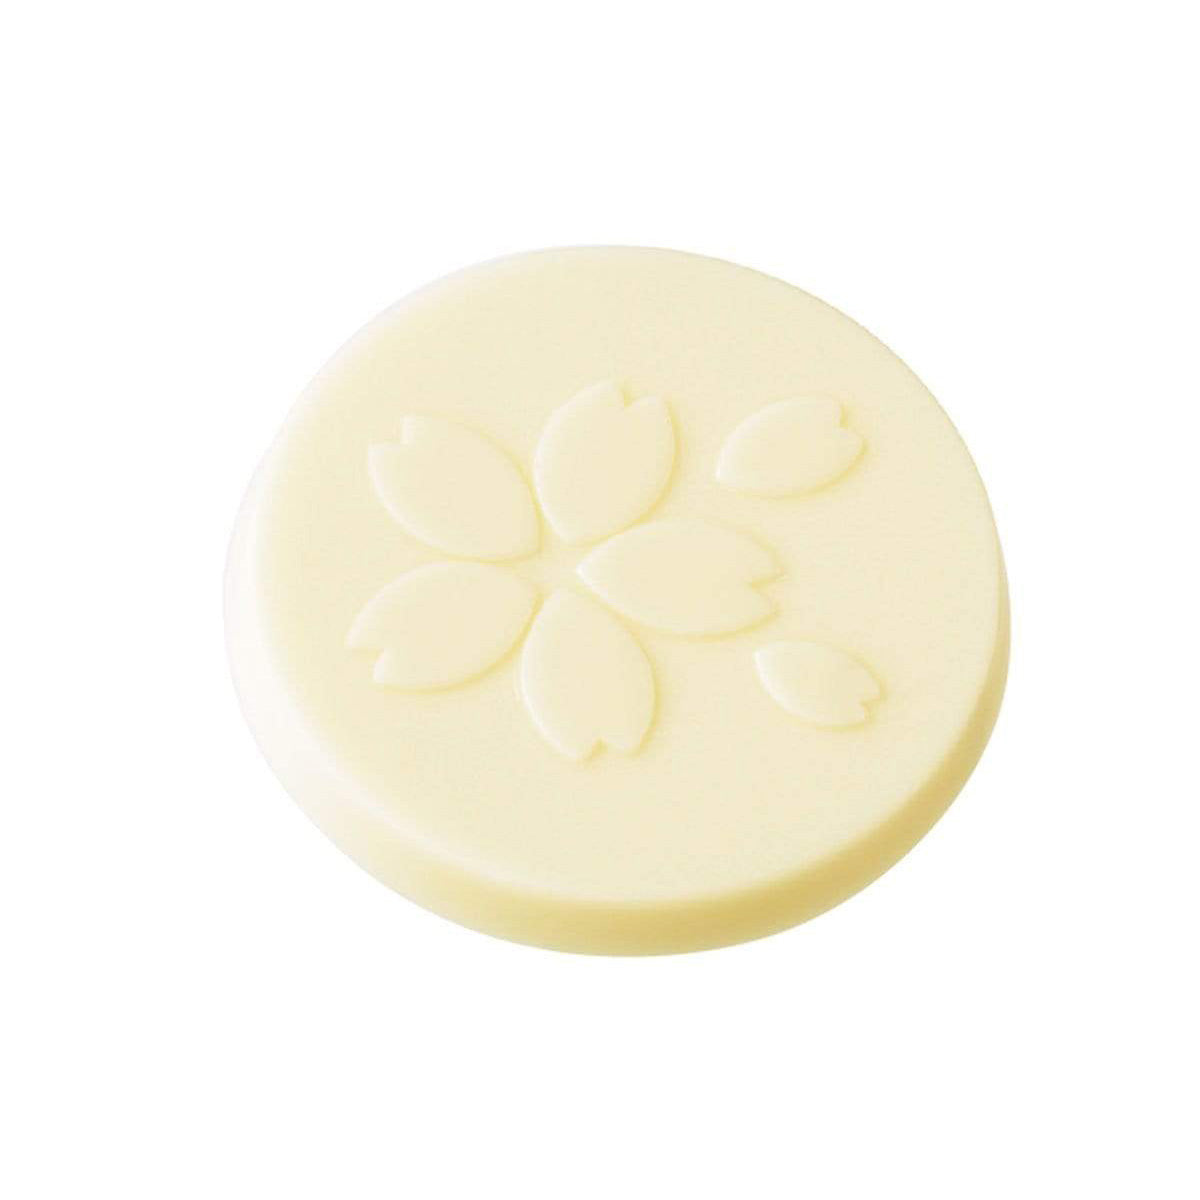 ROYCE' Chocolate - Sakuraberry & Sakurawhite Chocolate - Image shows a white chocolate disc with floral engraving.